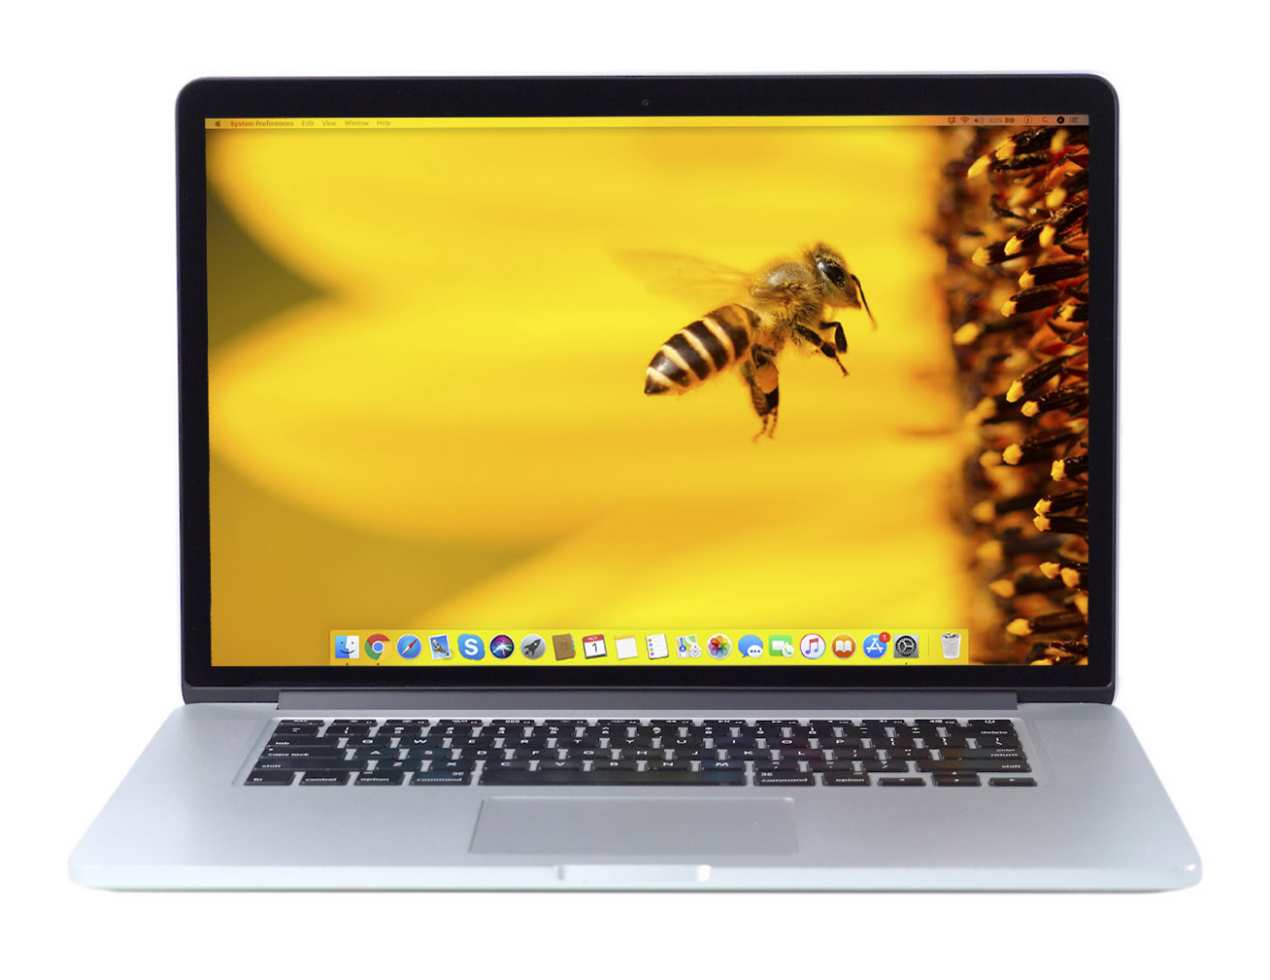 Apple MacBook Pro (15-inch Late 2013) 2.0 GHz I7-4750HQ 8GB 256GB SSD (Silver)